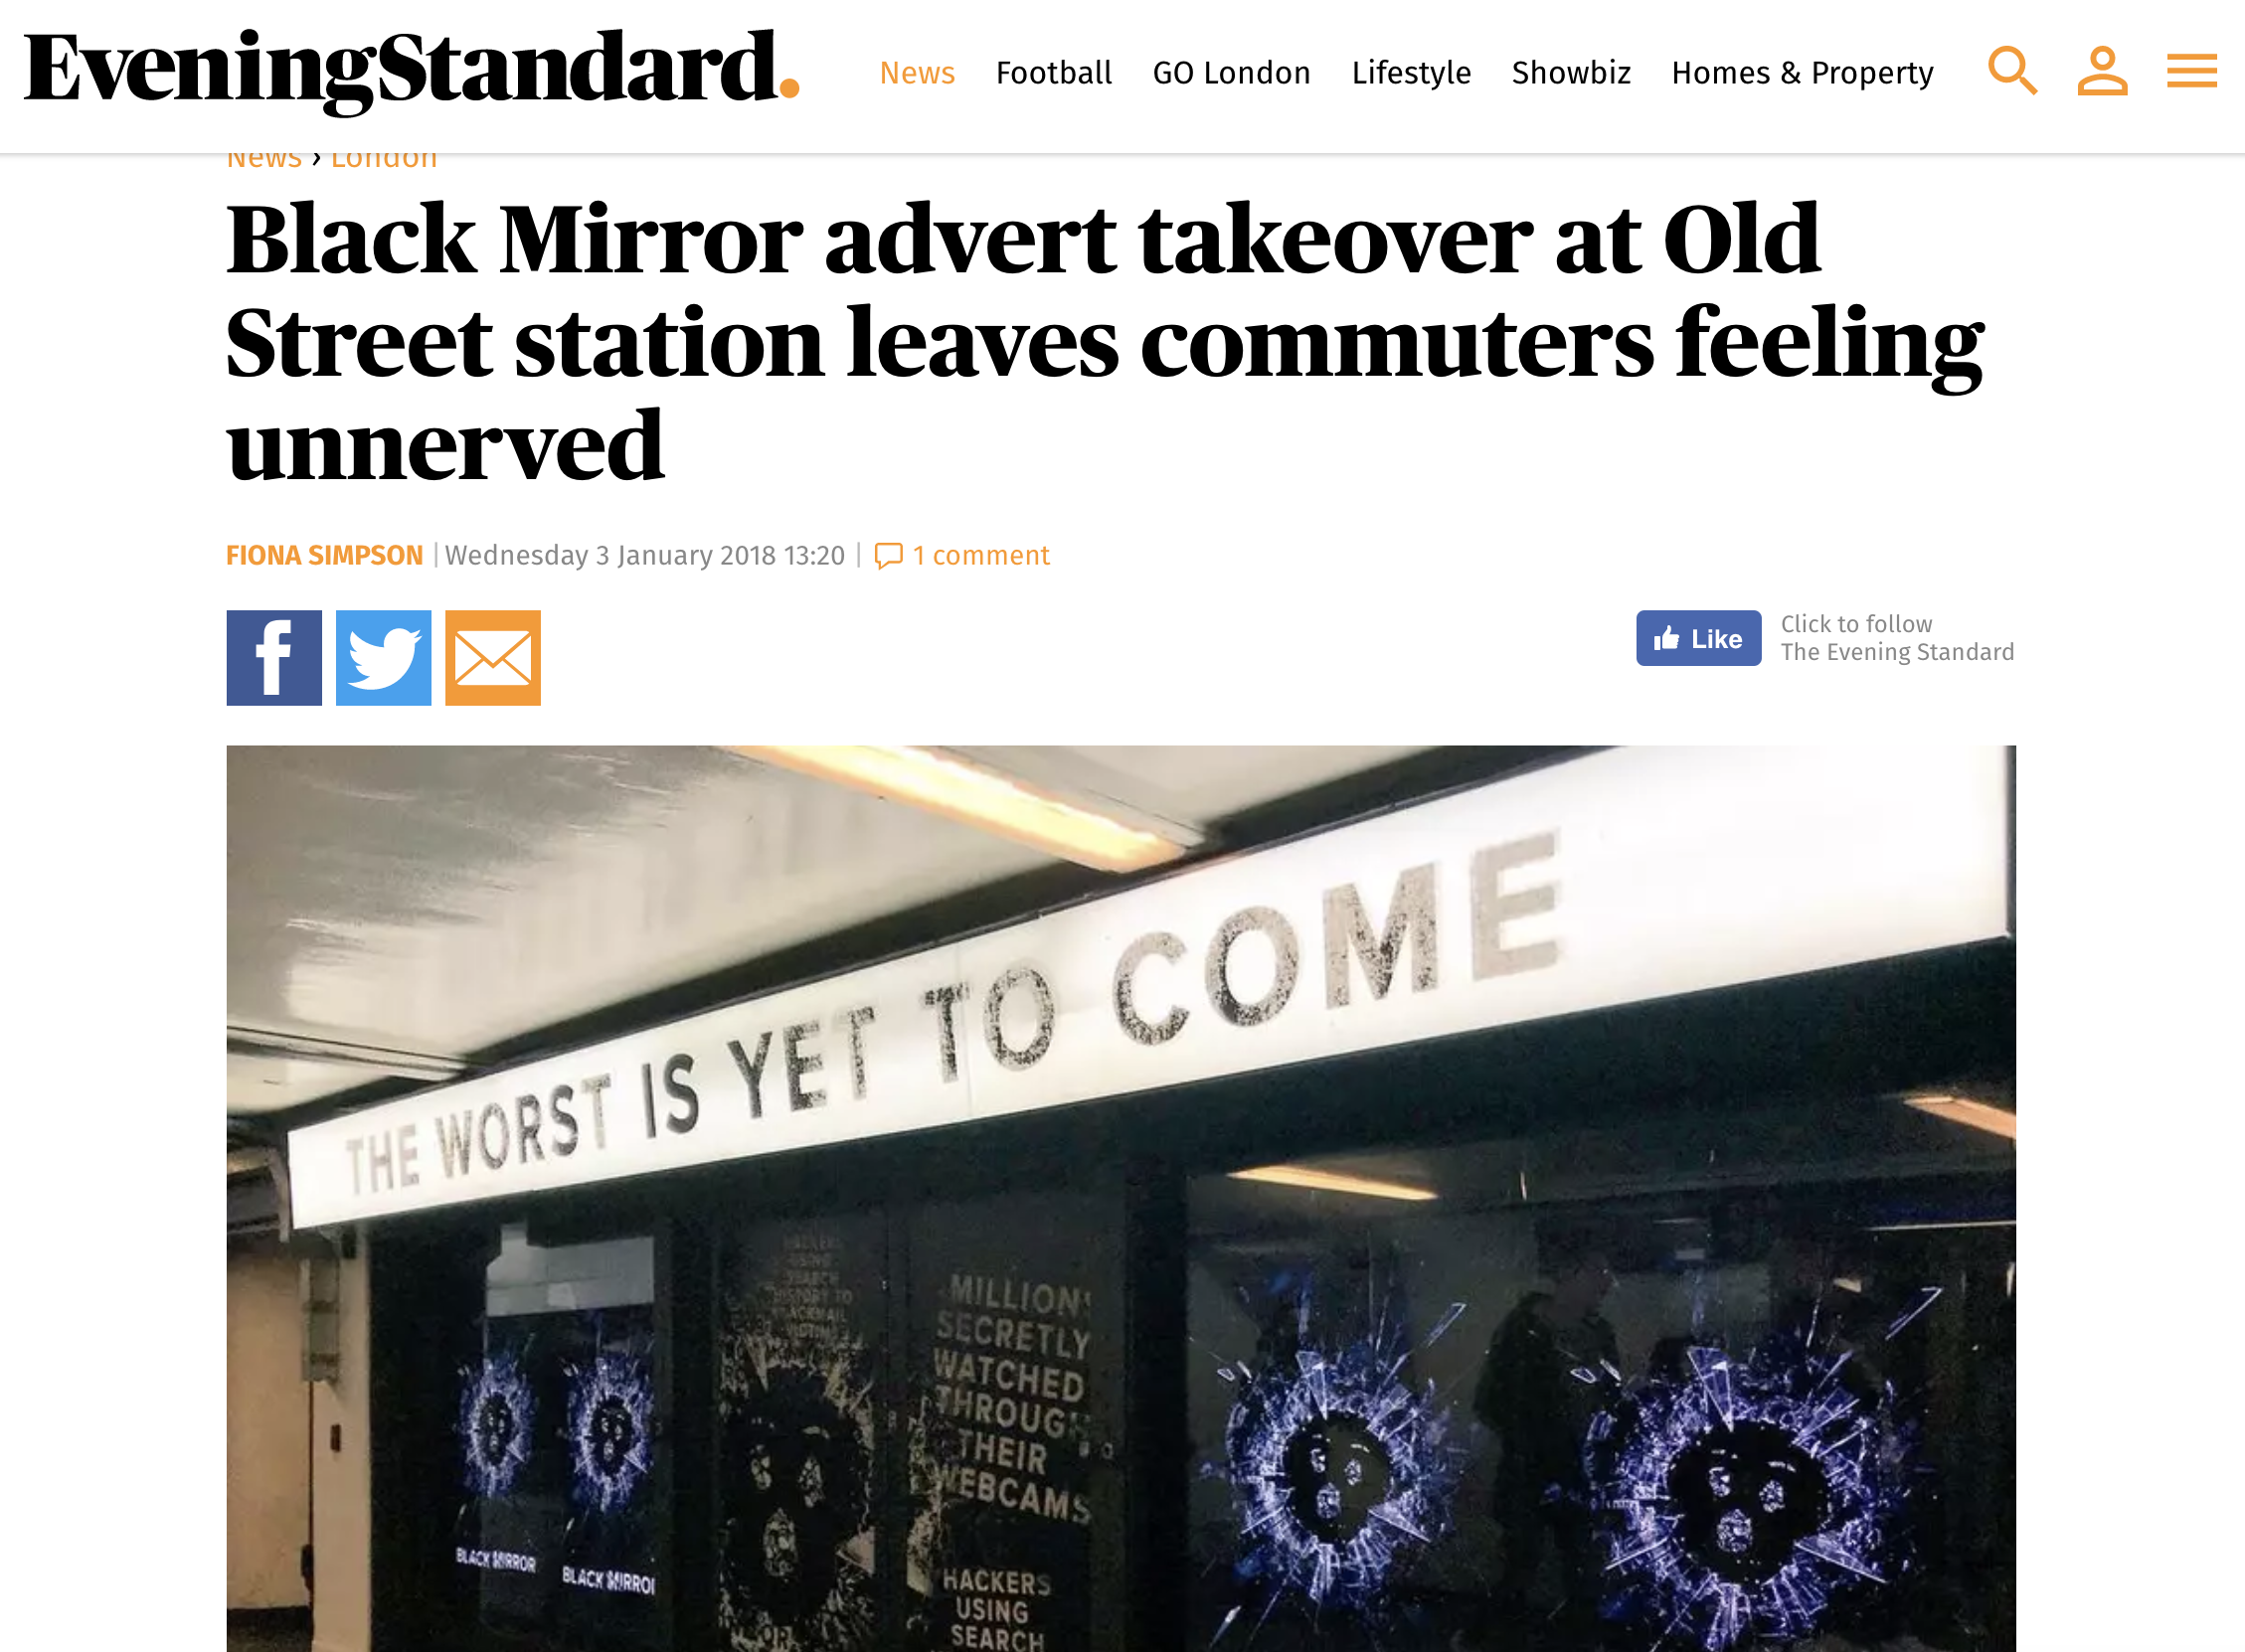 Black Mirror Ads take over Old Street Station